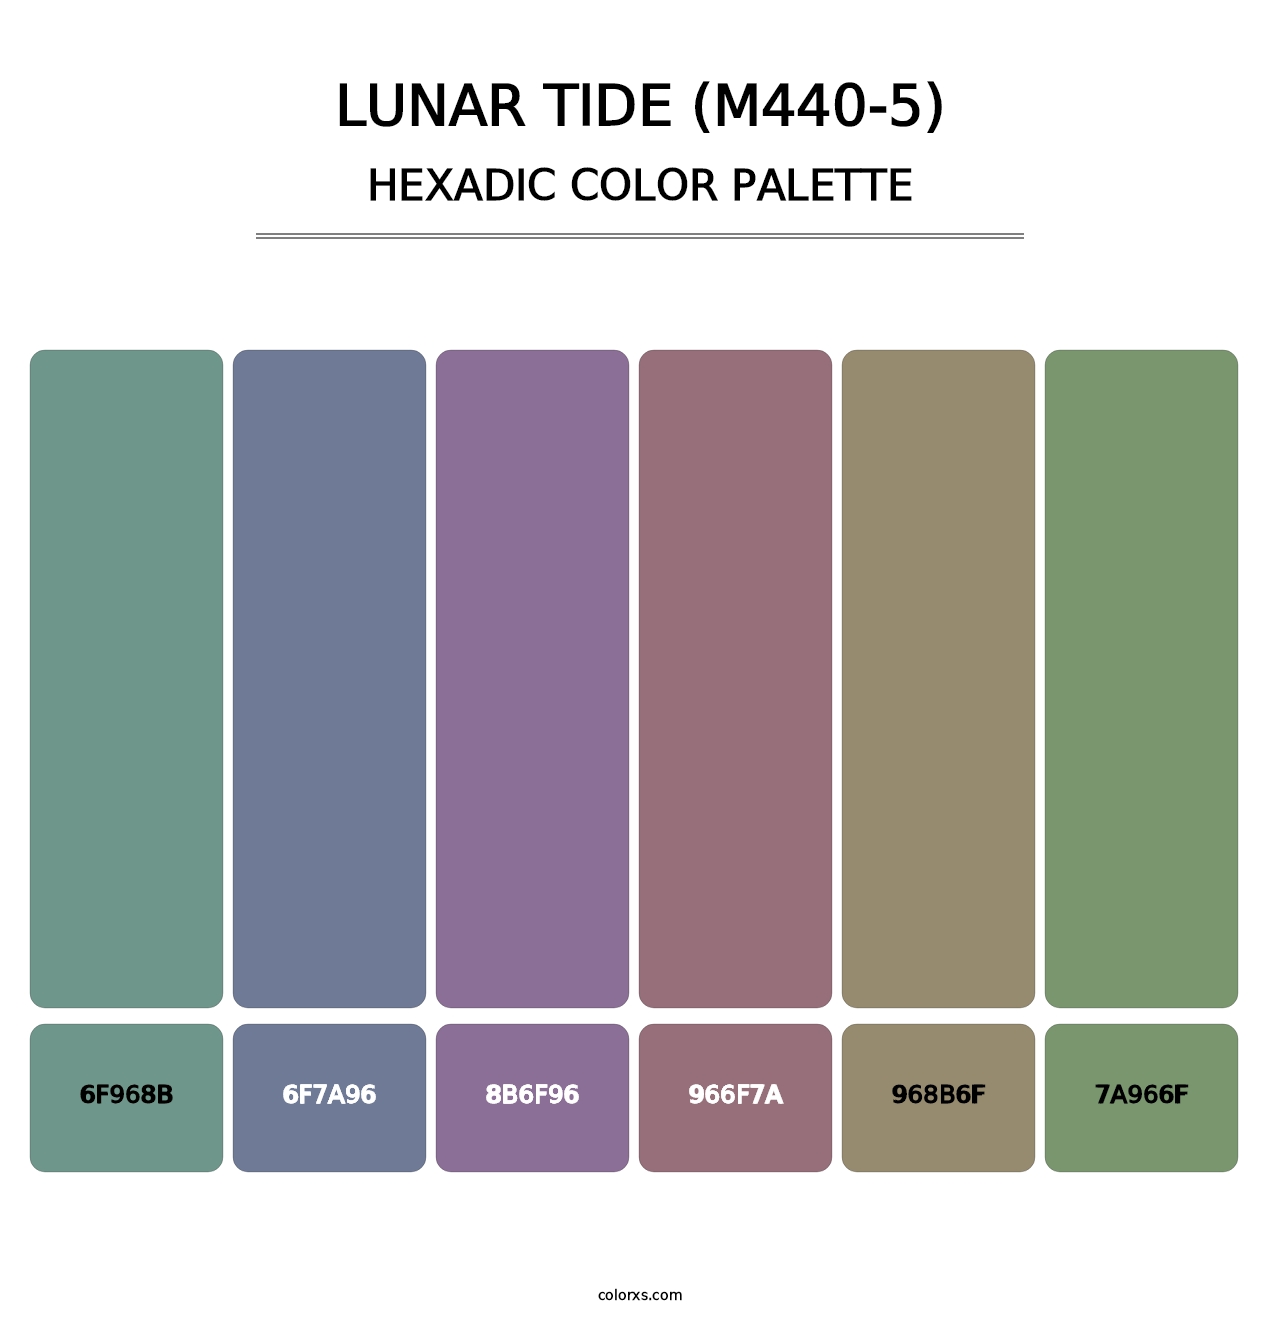 Lunar Tide (M440-5) - Hexadic Color Palette